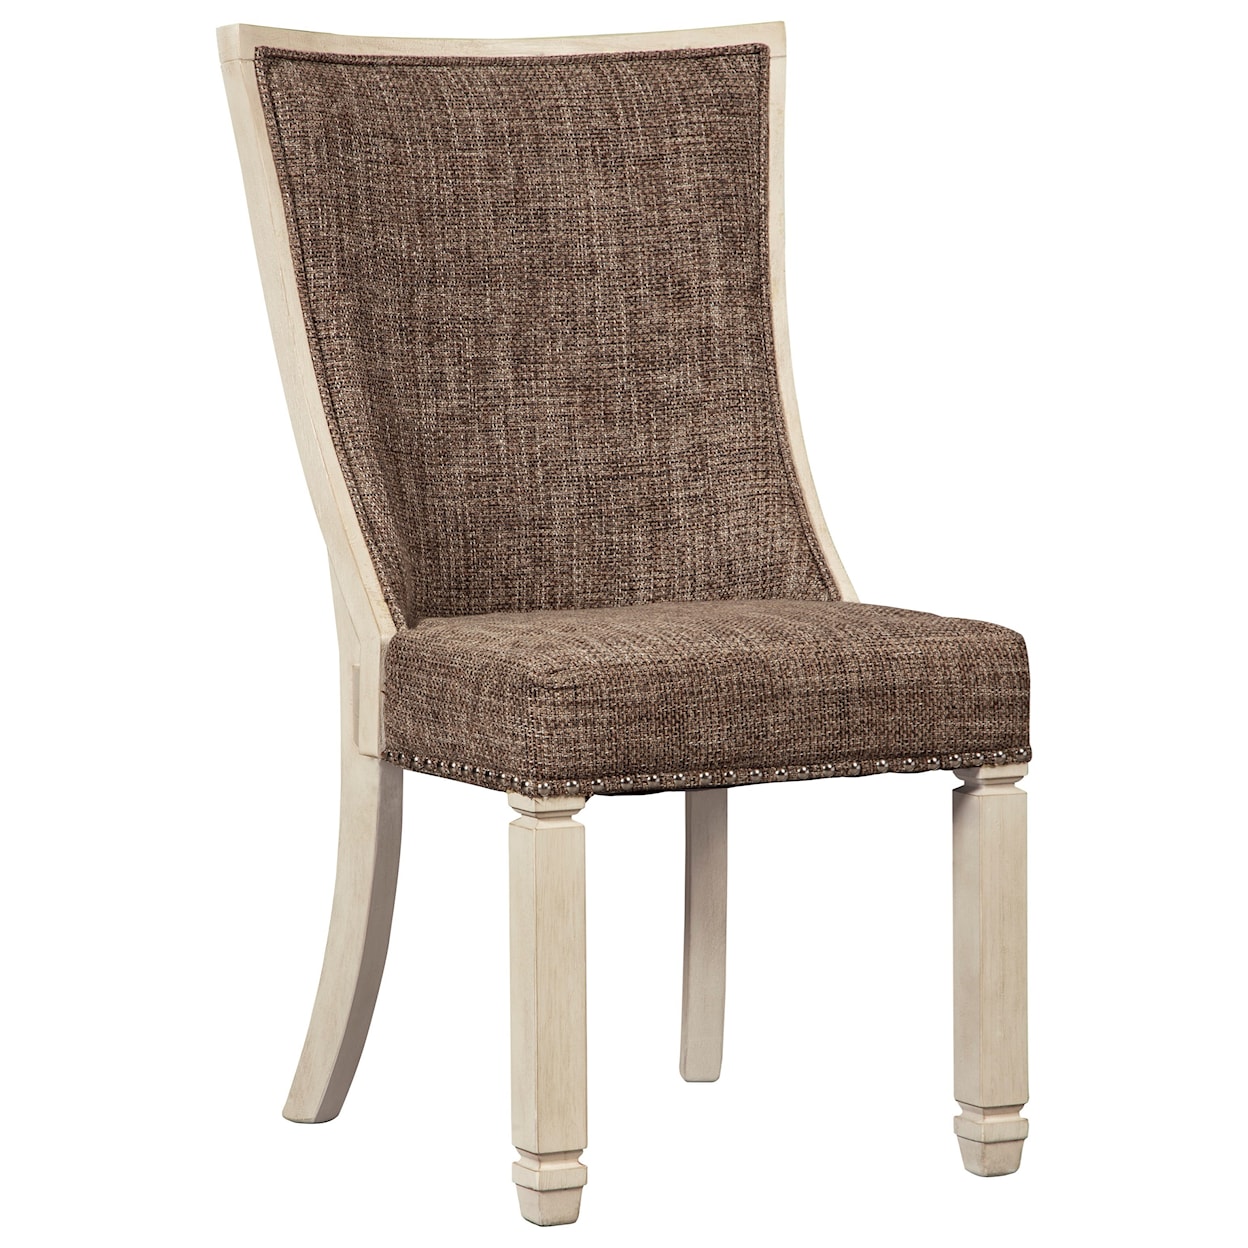 Belfort Select Bolanburg Upholstered Side Chair